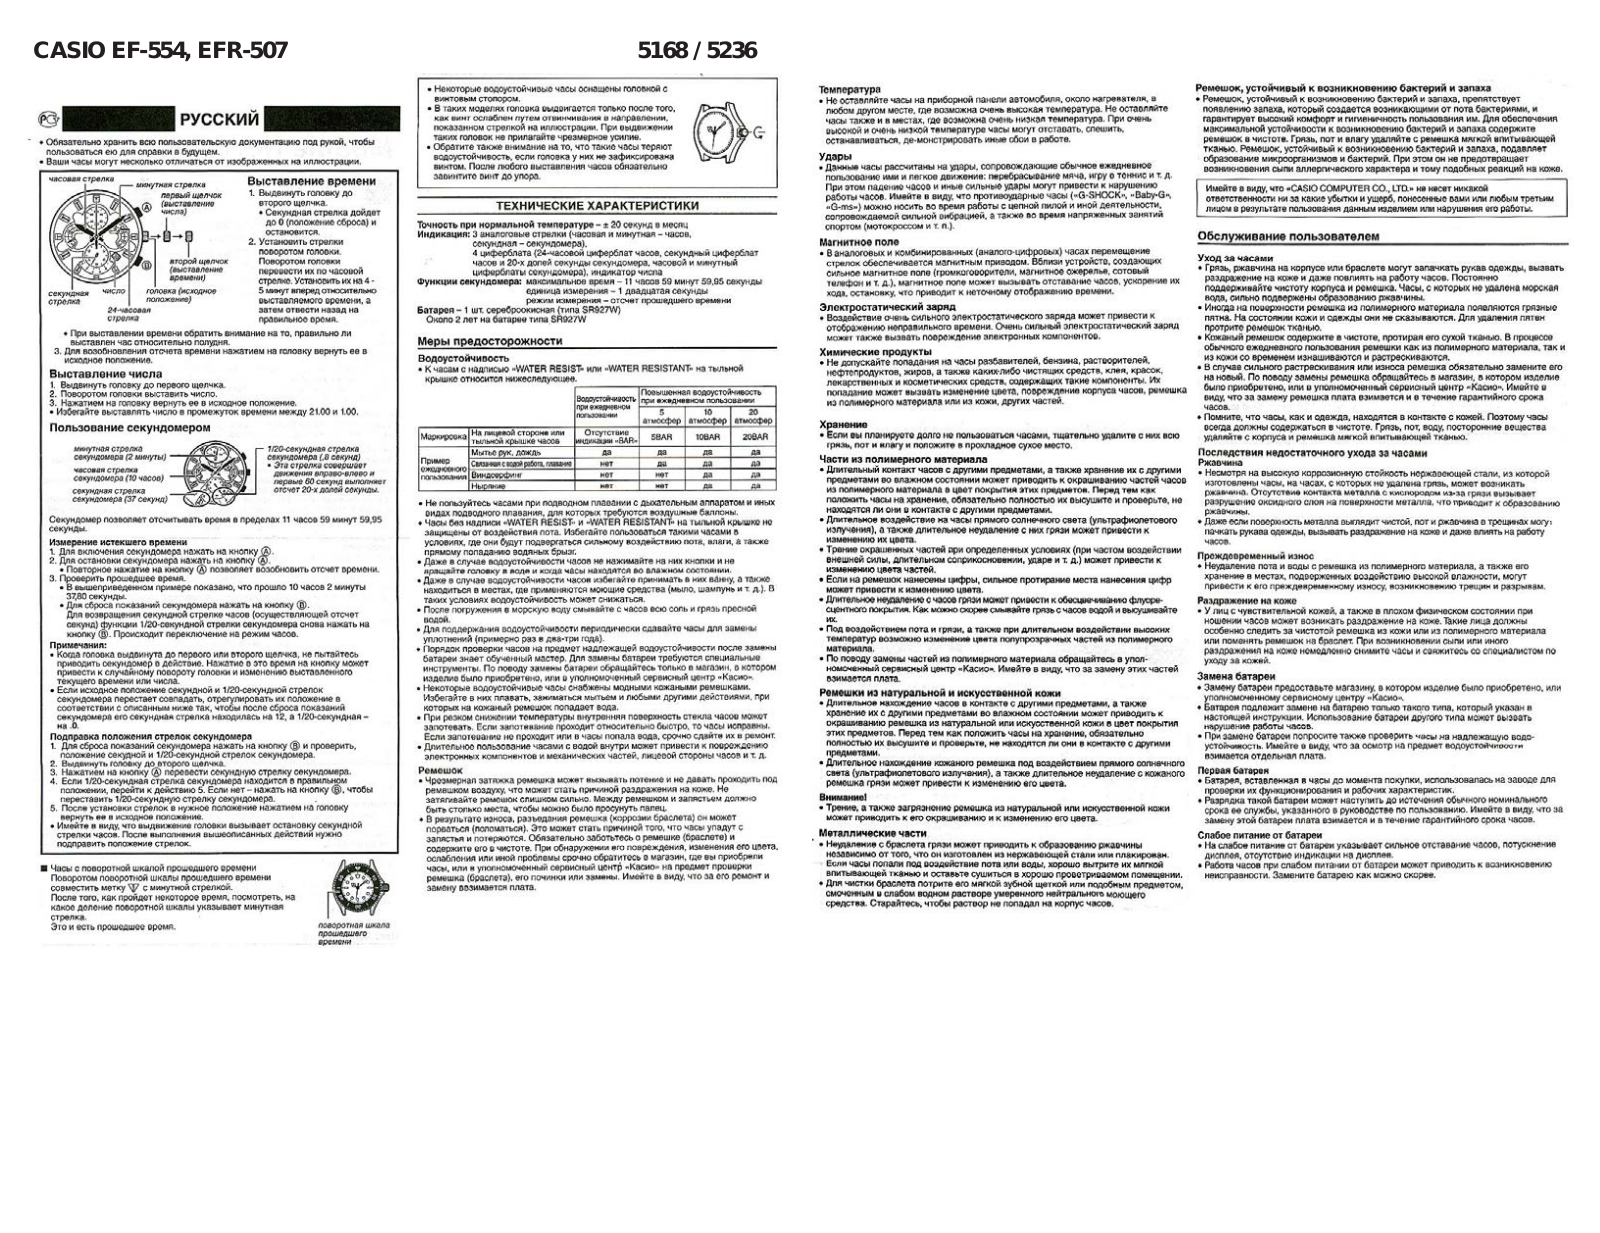 Casio EFR-507D-1A User Manual